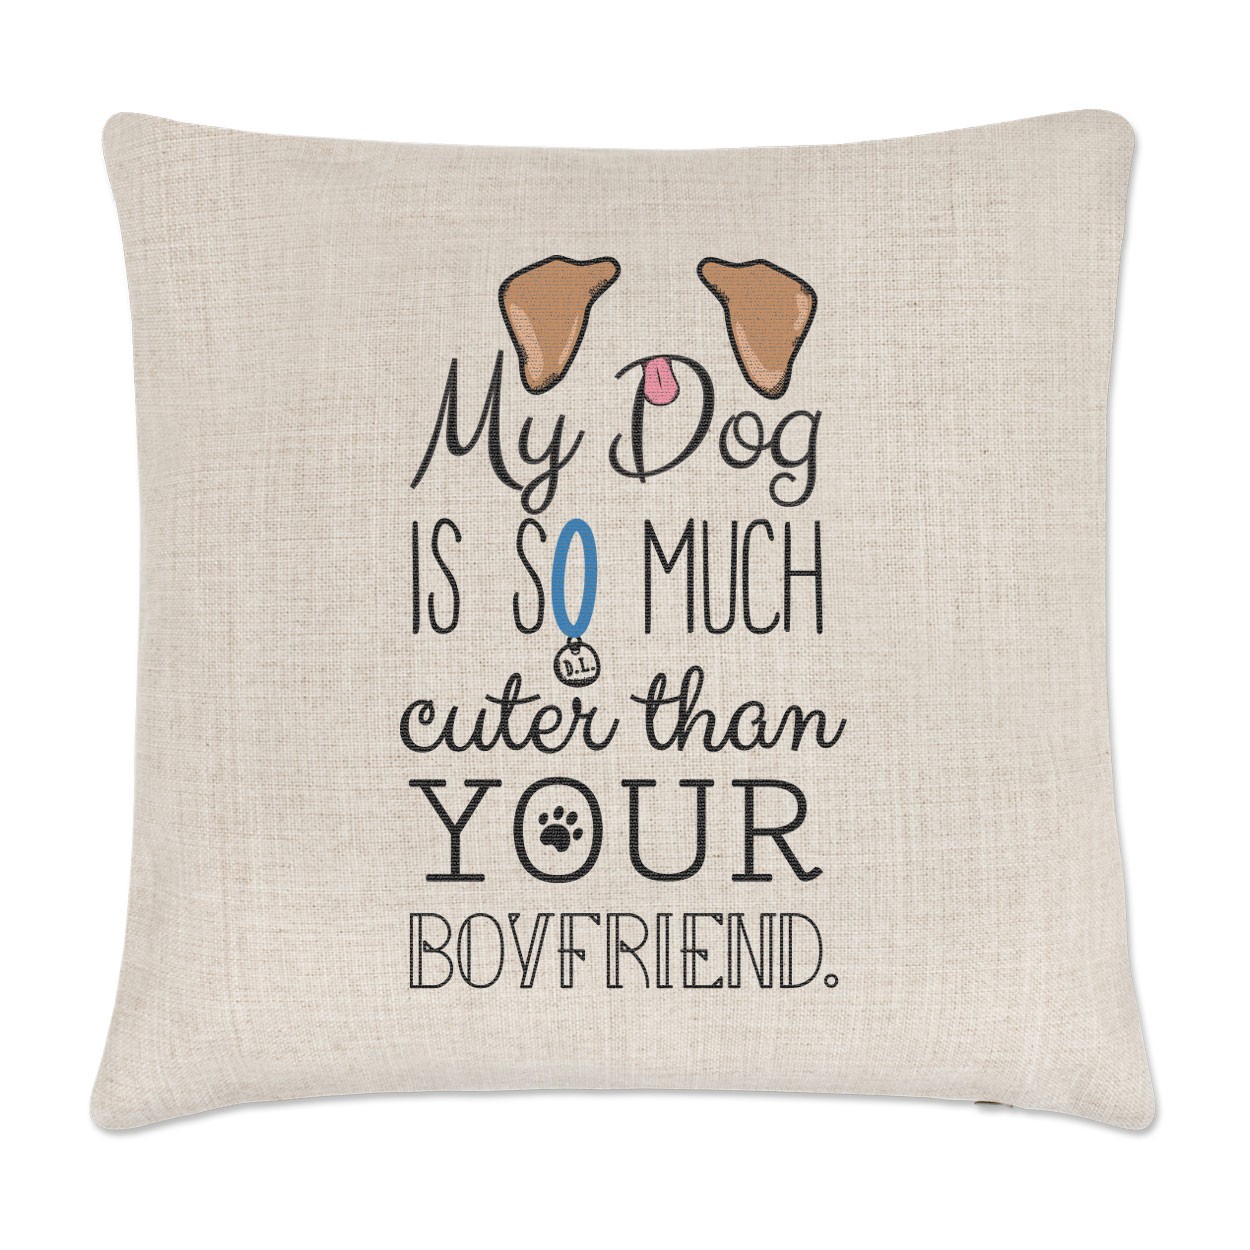 My Dog Is Cuter Than Your Boyfriend Brown Ears Linen Cushion Cover